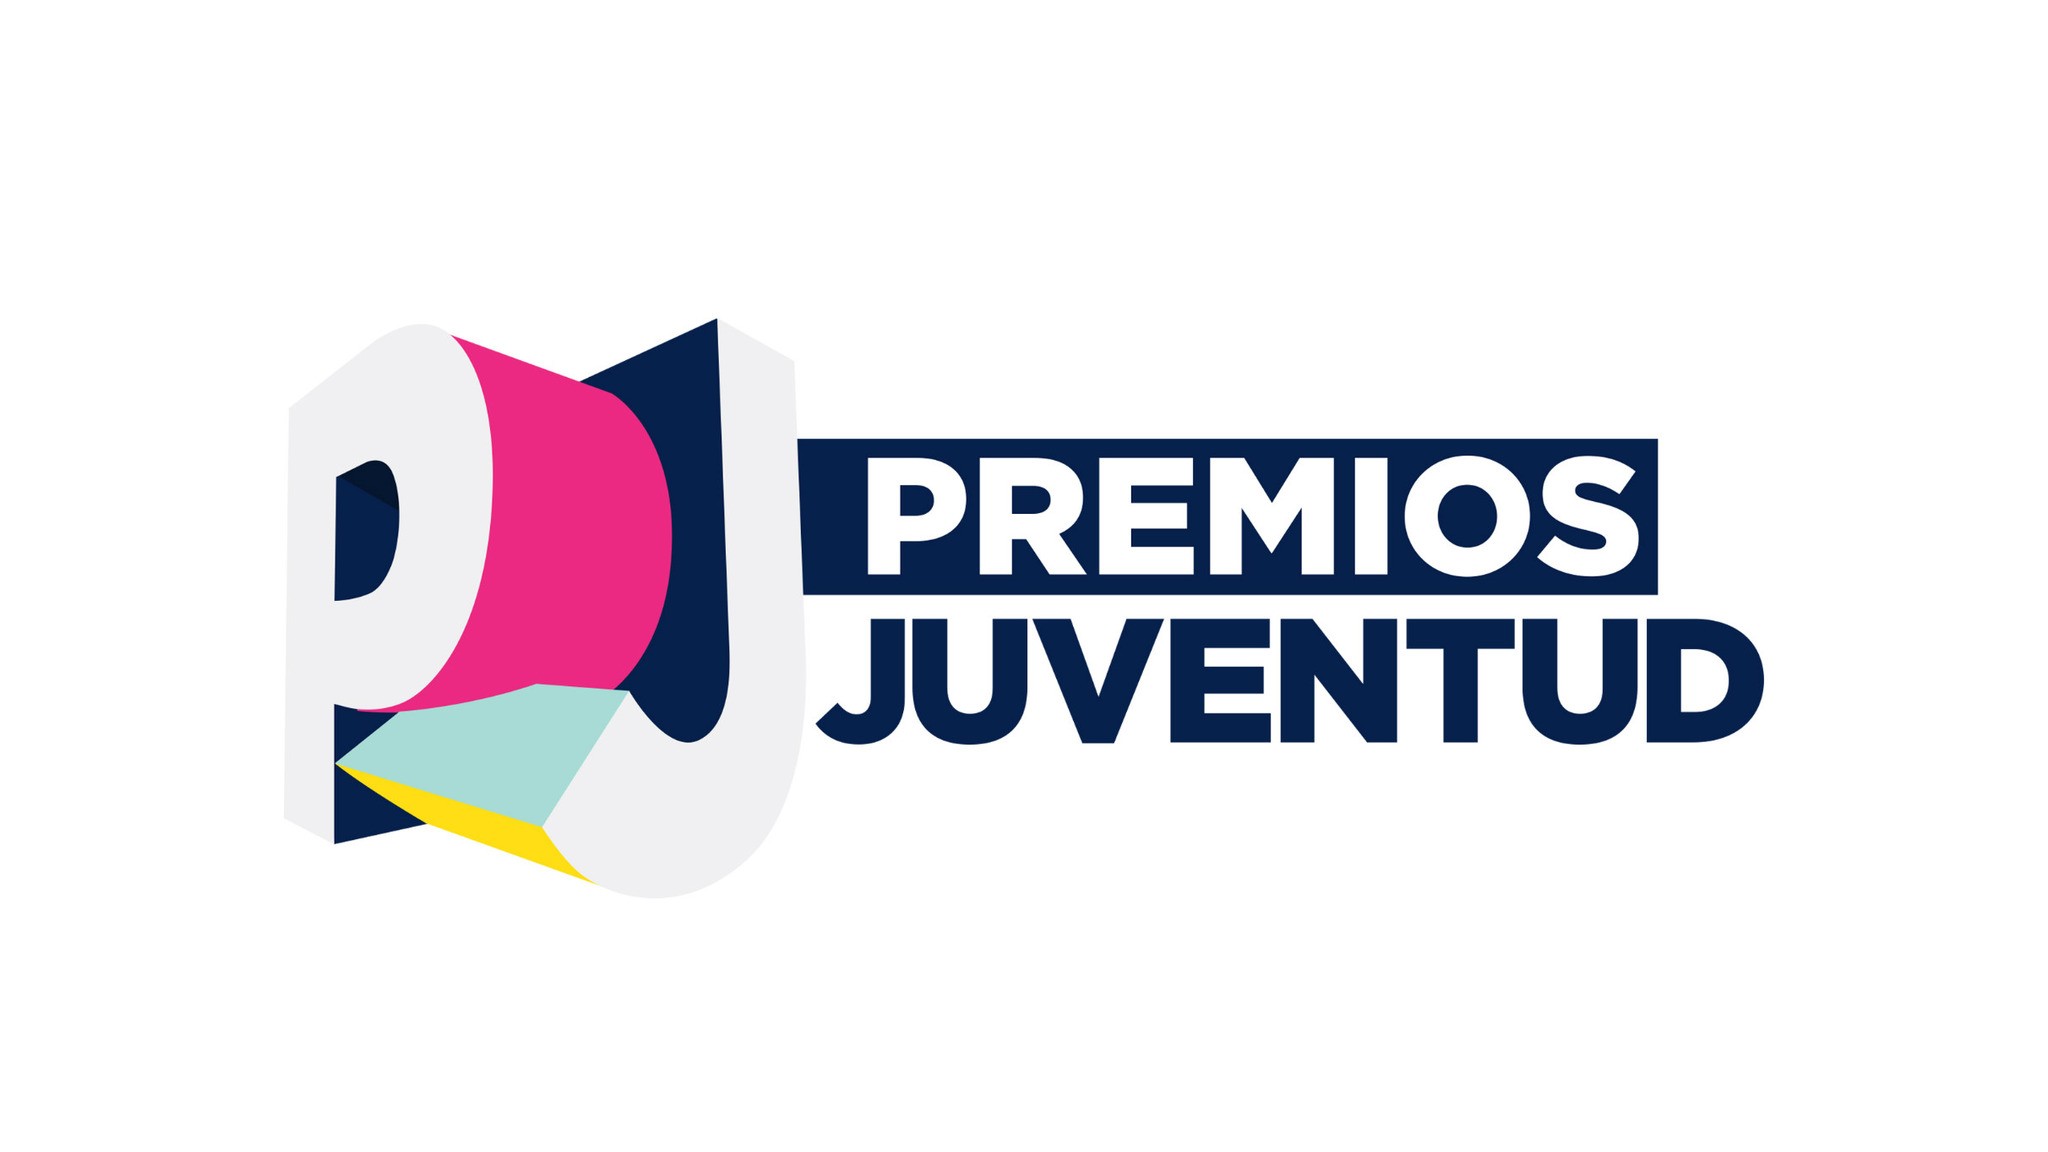 Read more about the article “Premios Juventud 2019”: confira os indicados e vote em seus favoritos